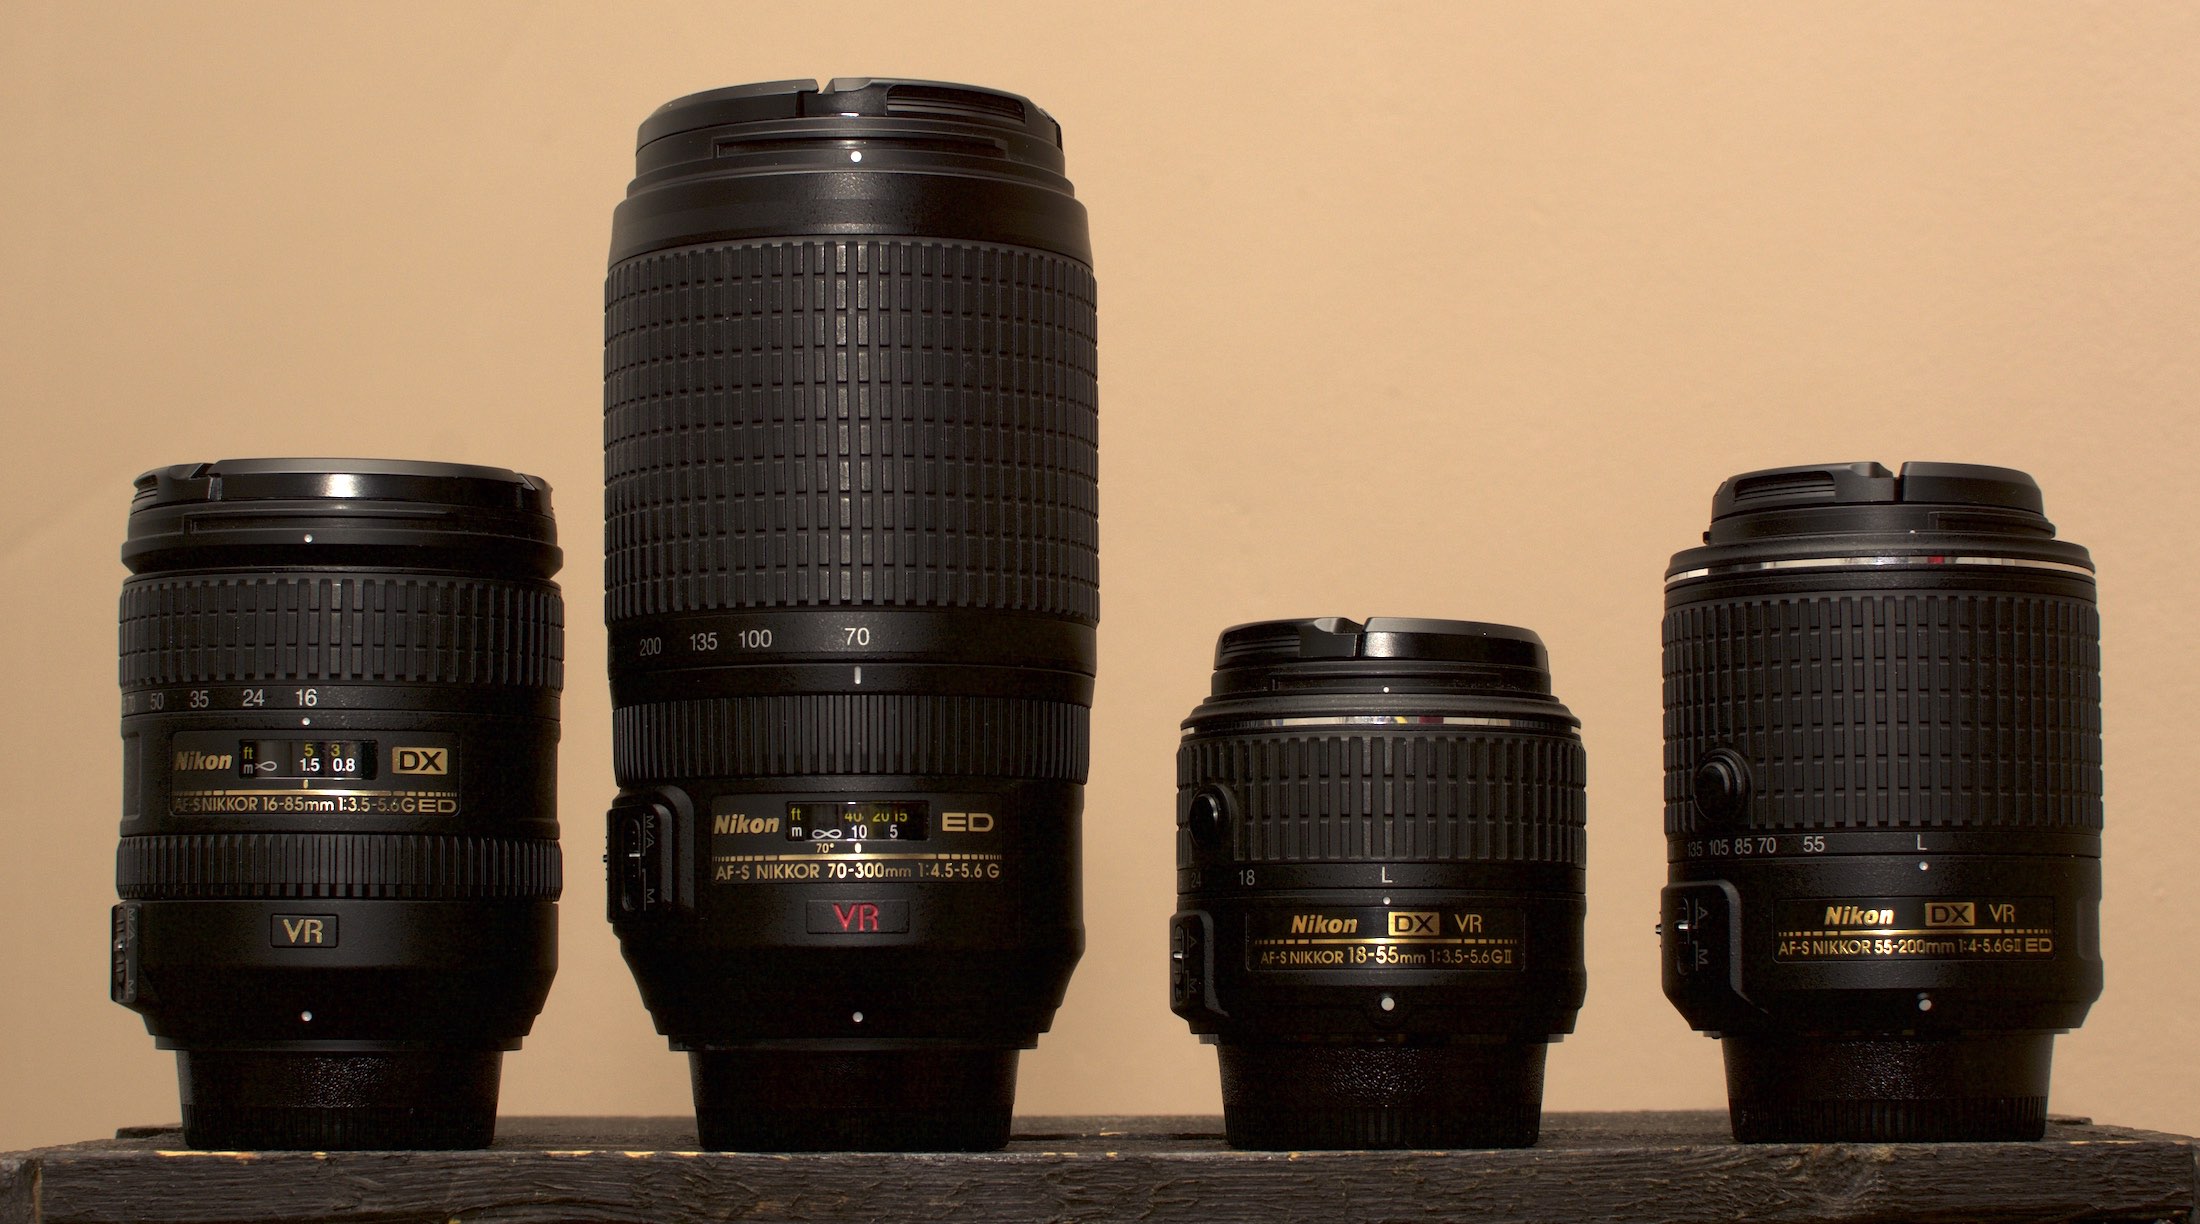 X1P4 52mm 2X Magnification Telephoto Lens for Nikon AF-S 18-55mm 55-200mm Lens 